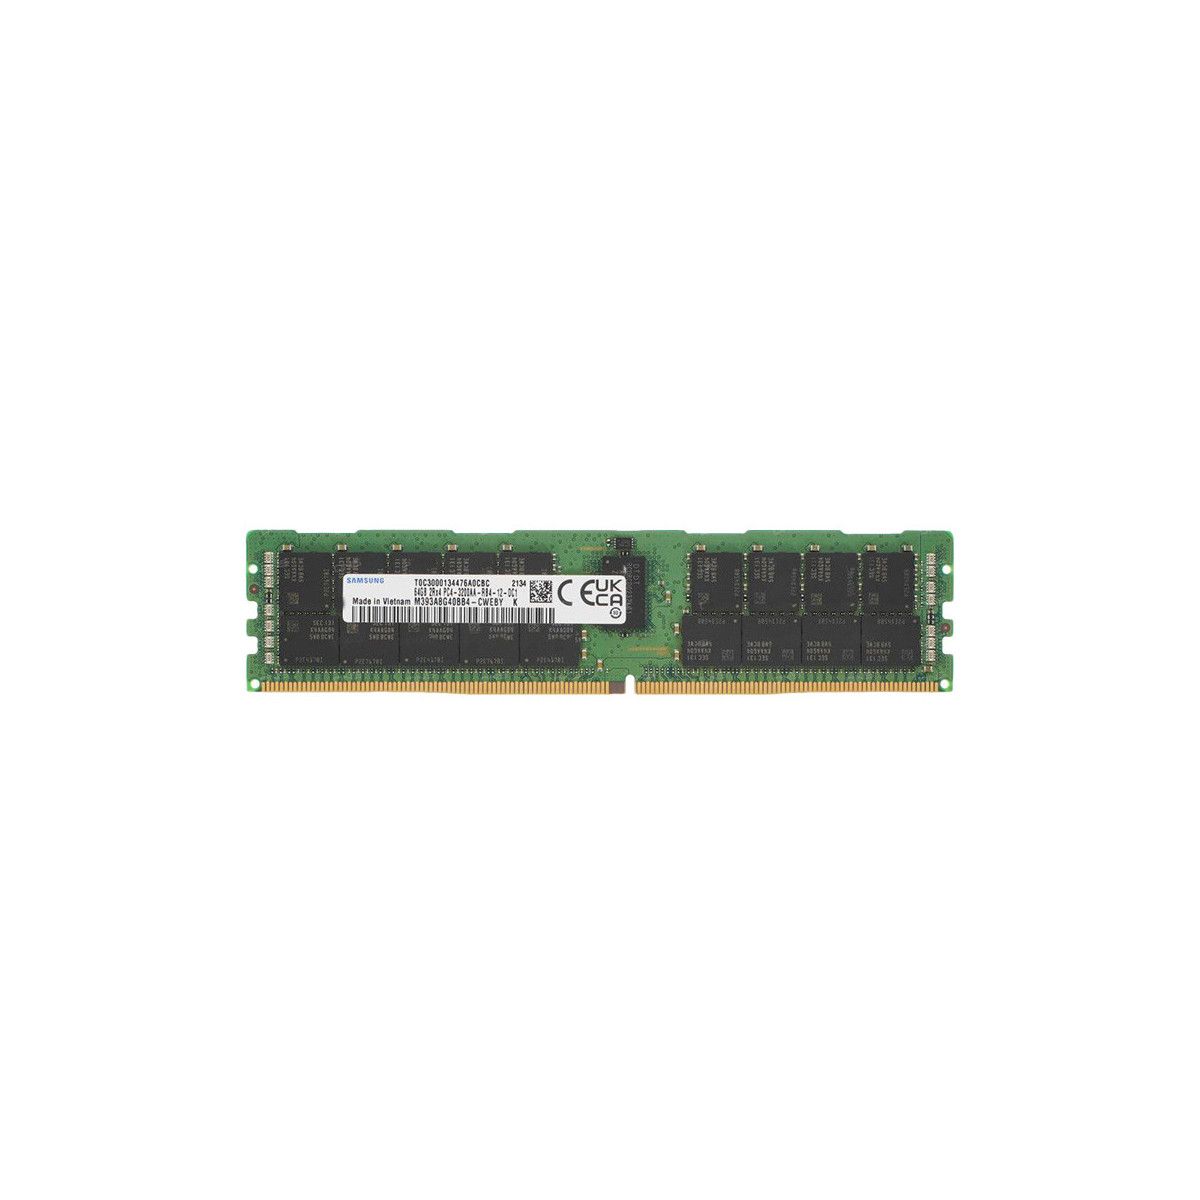 AA810828-MS - Memstar 1x 64GB DDR4-3200 RDIMM PC4-25600R - OEM compatible con Mem-Star Memoria 1 - Memstar 